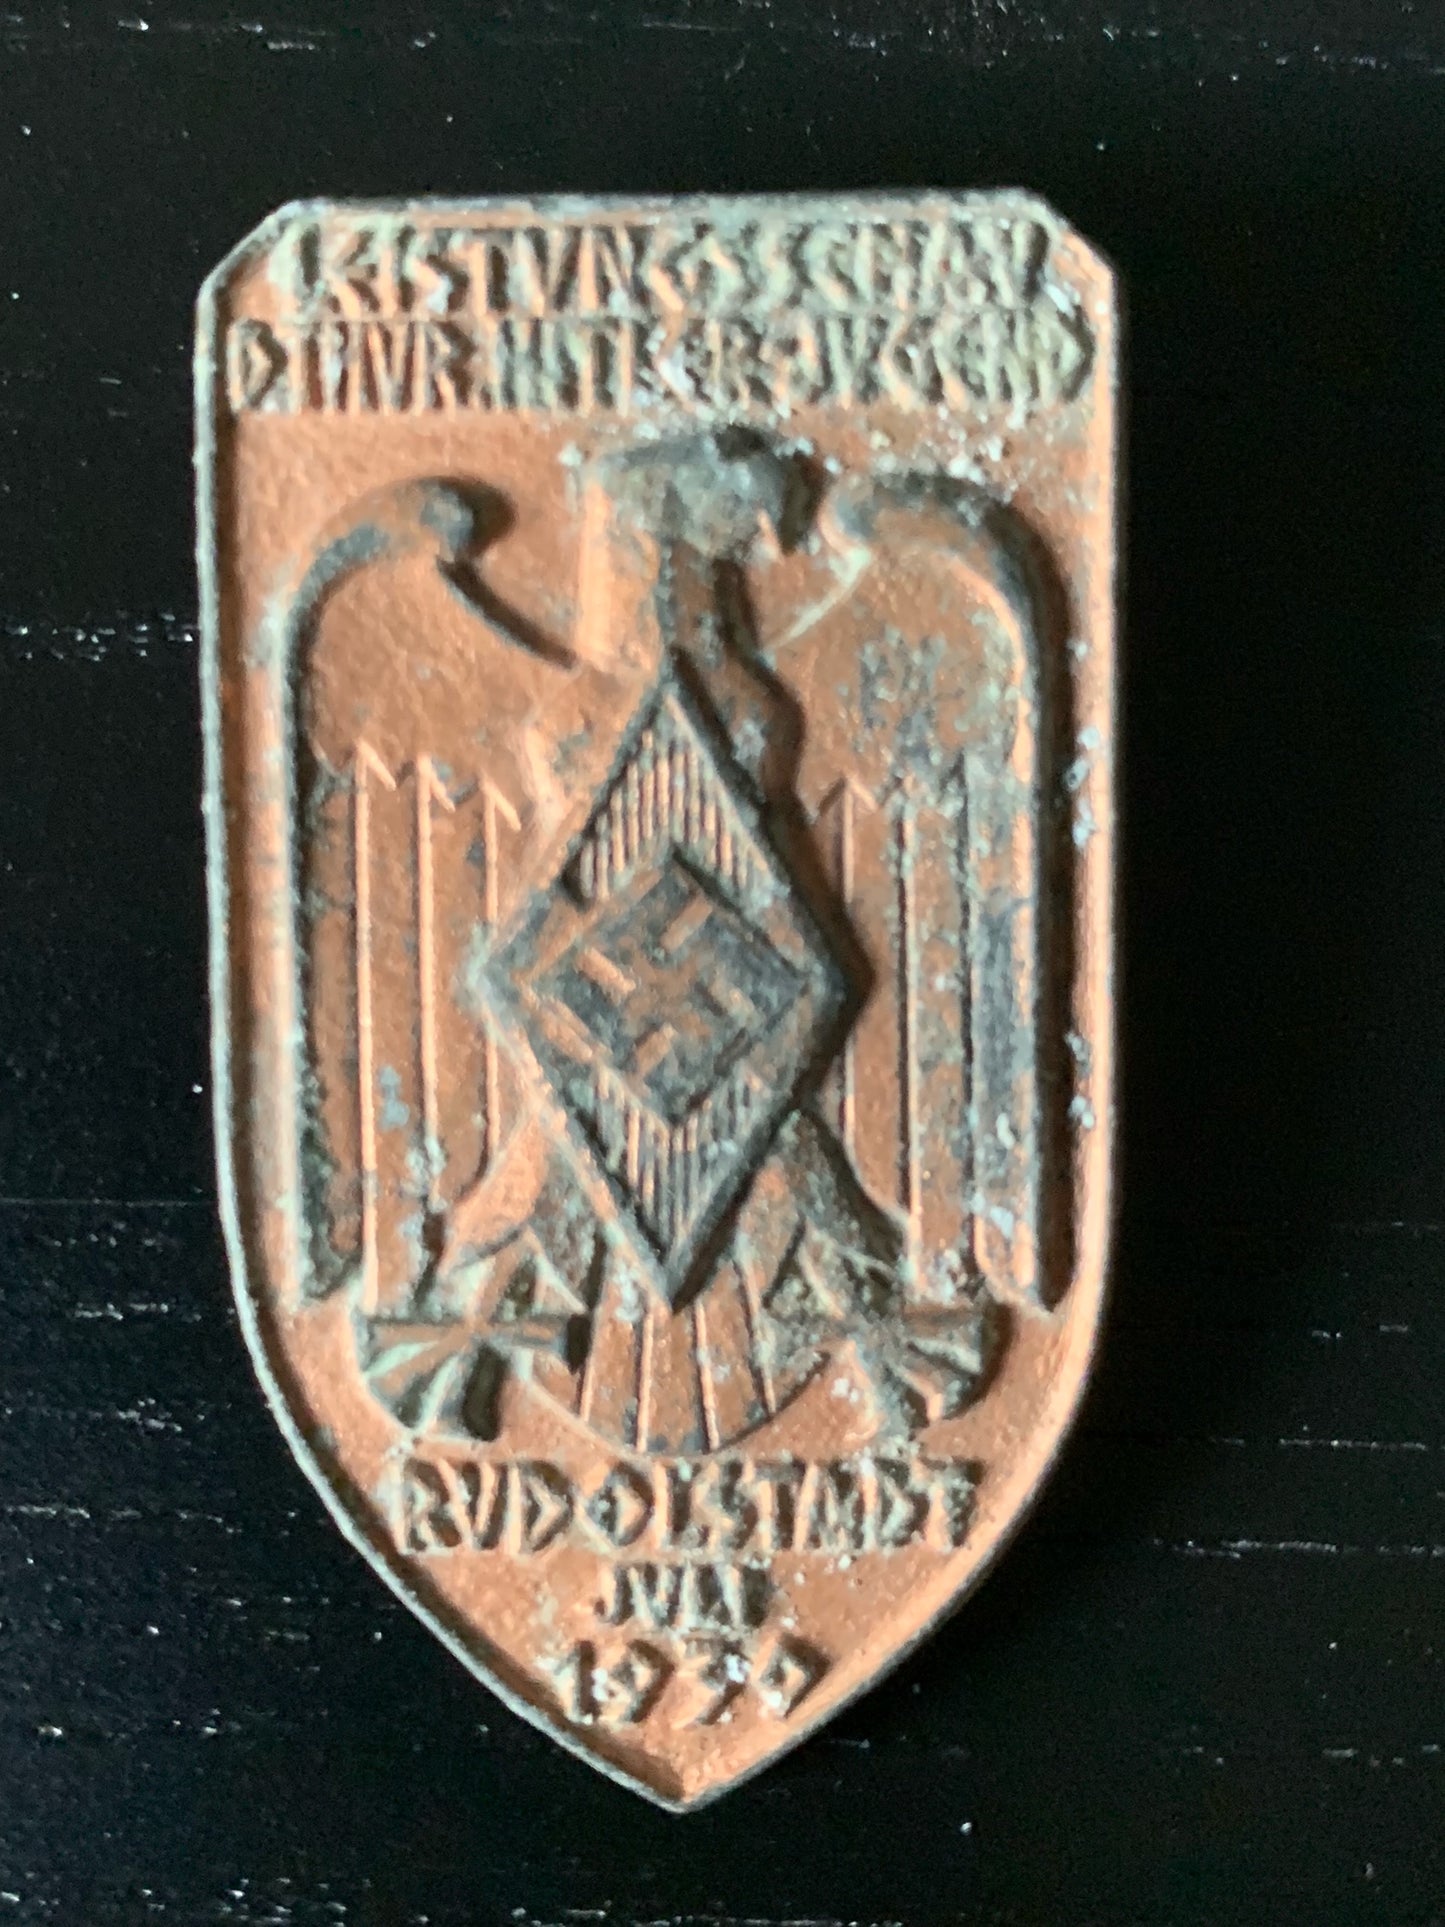 HJ event badge - Rudolstadt Juli 1939